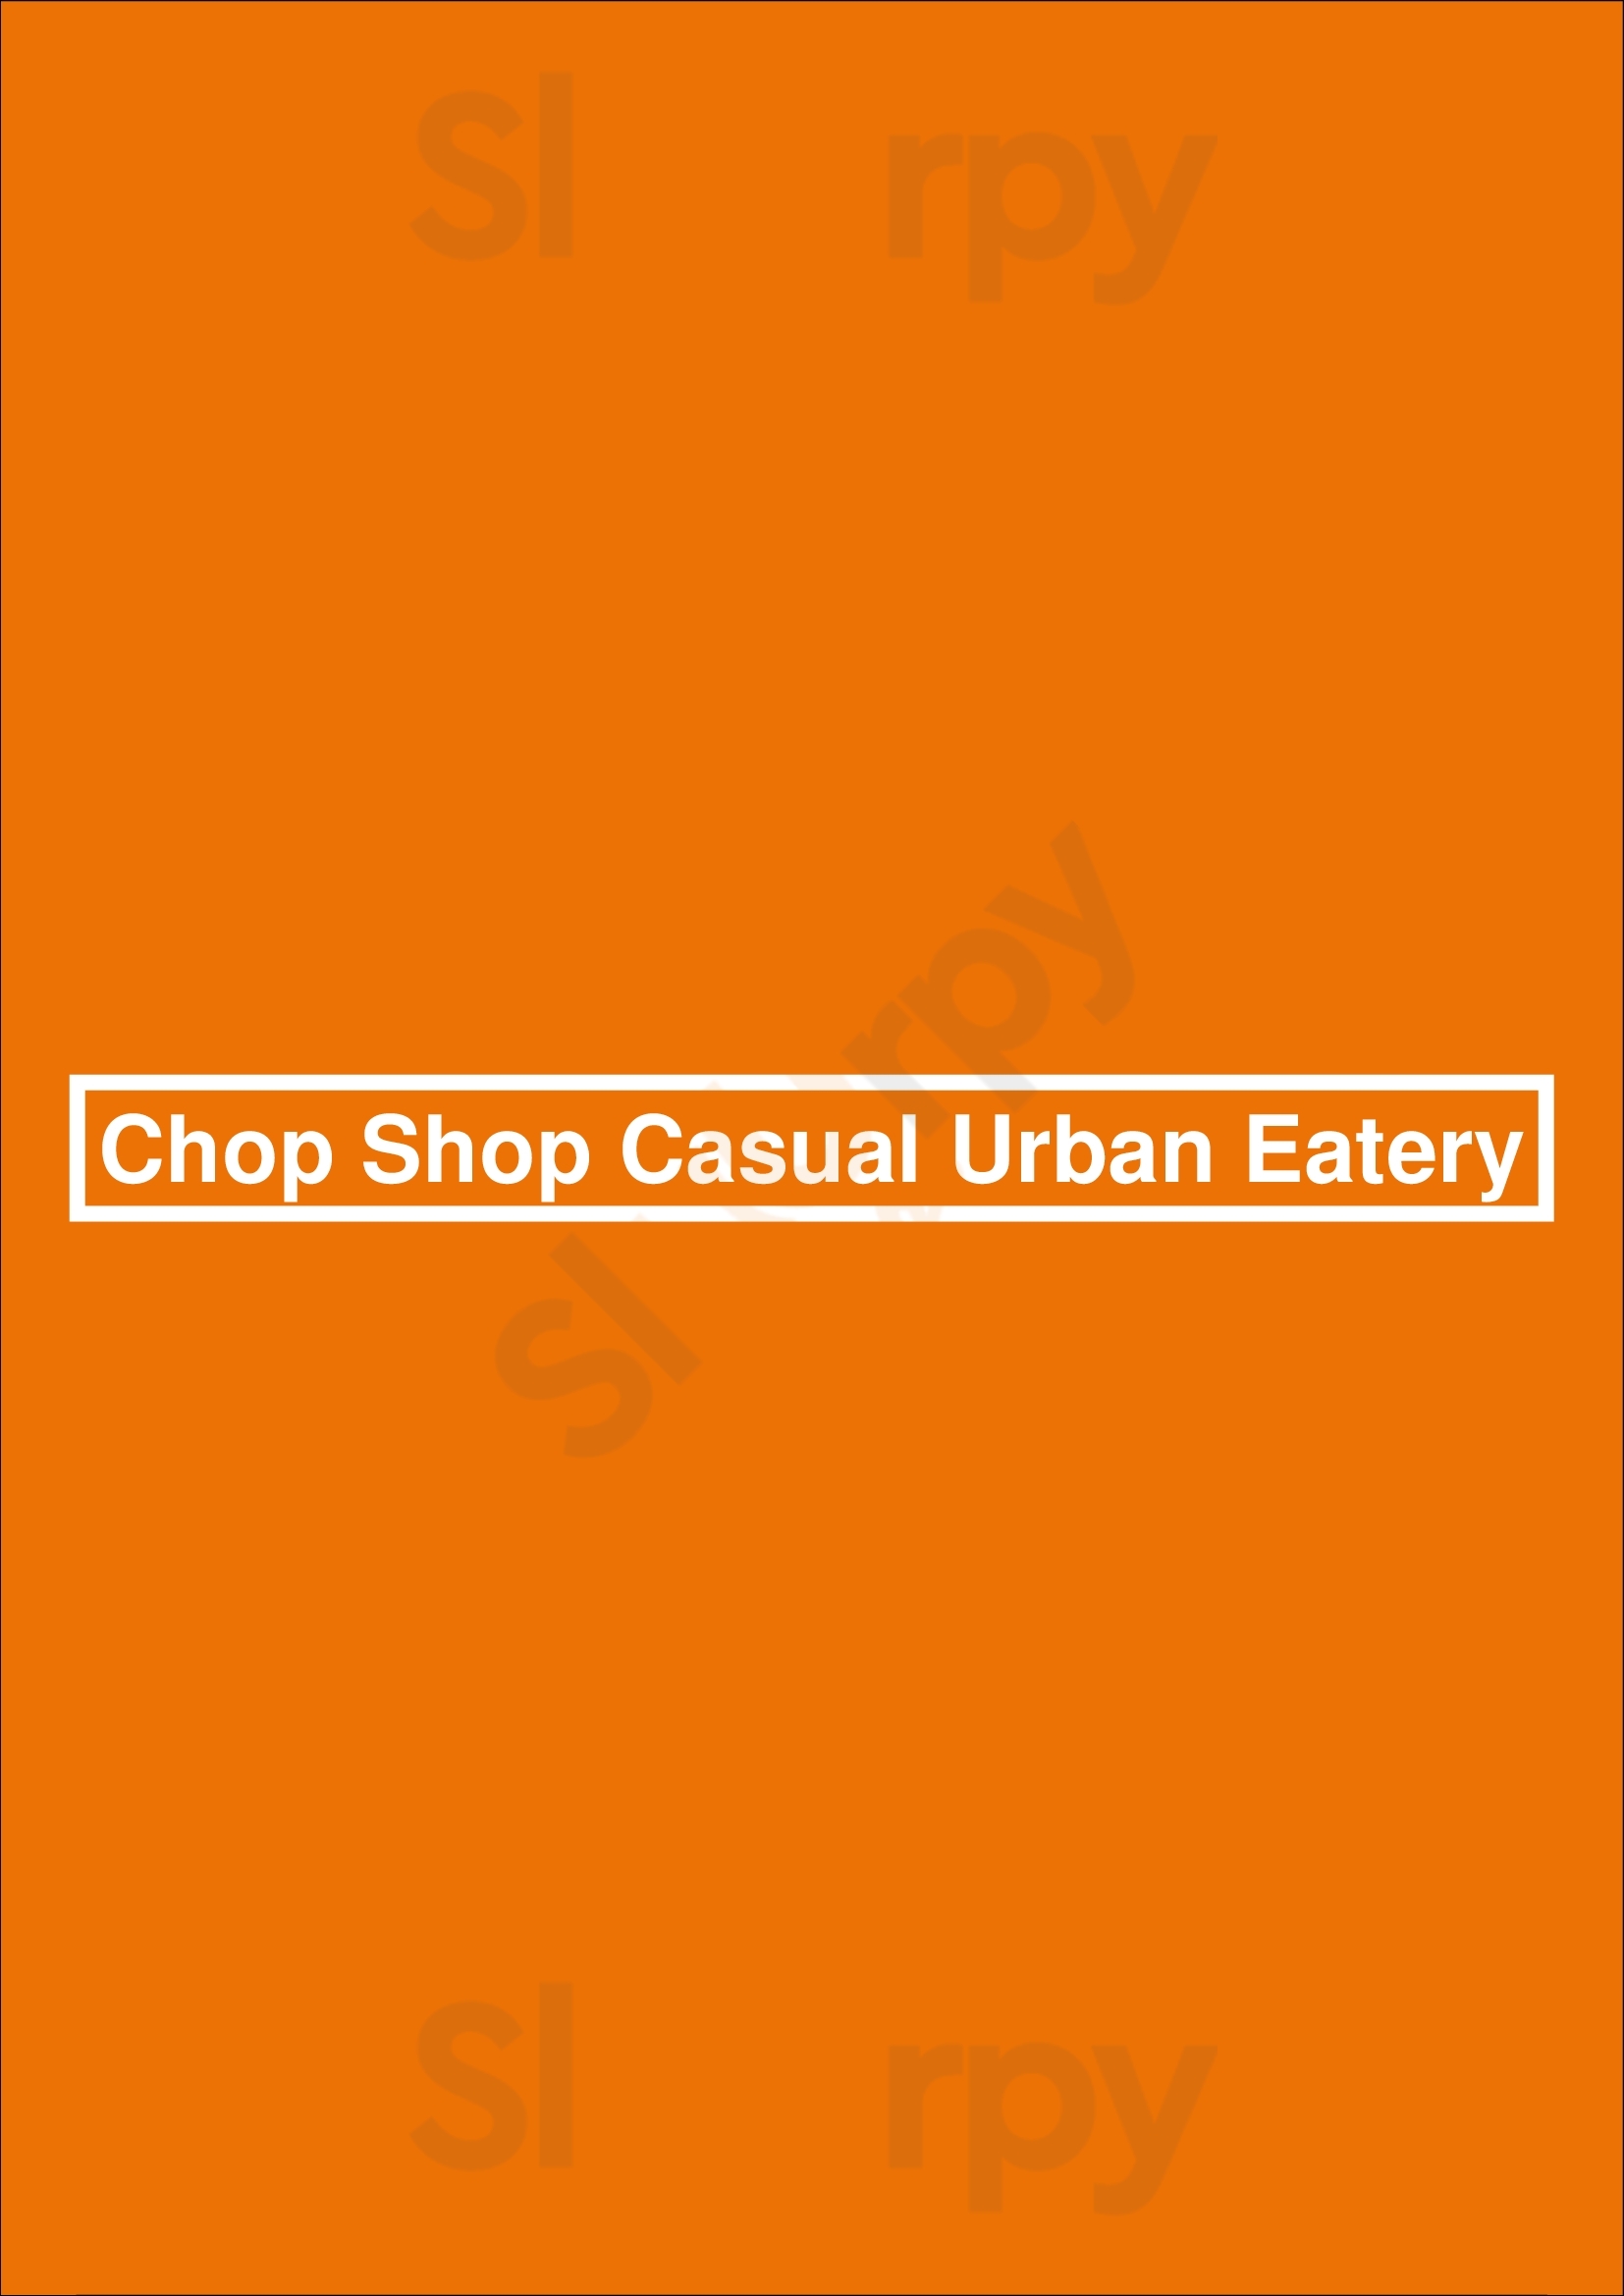 Chop Shop Casual Urban Eatery Denver Menu - 1